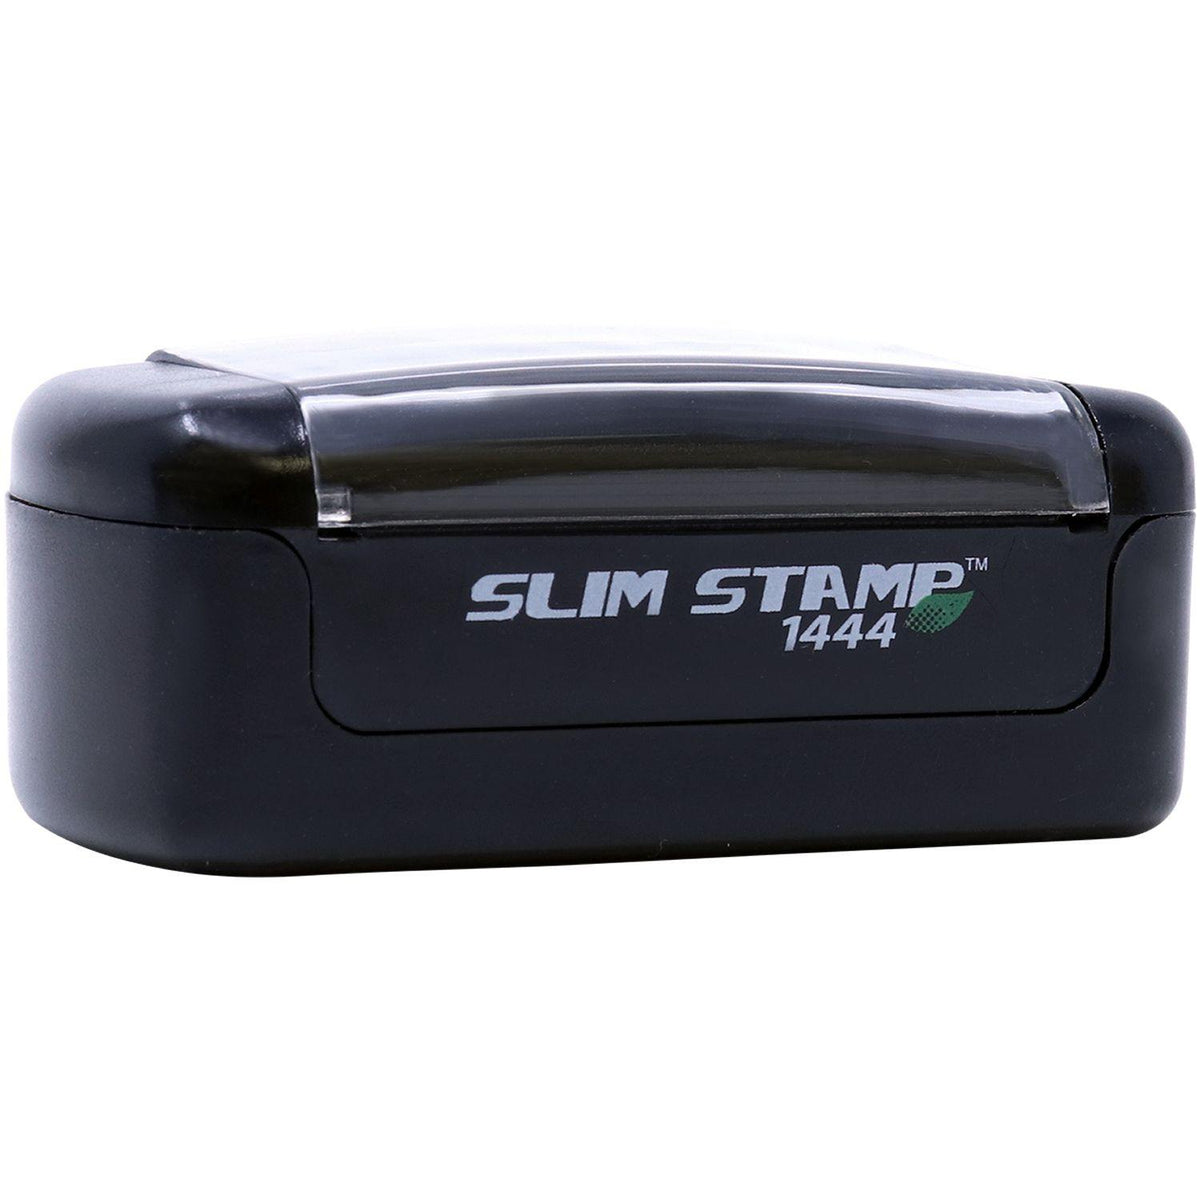 Alt View of Slim Pre-Inked Urgente Stamp Front View